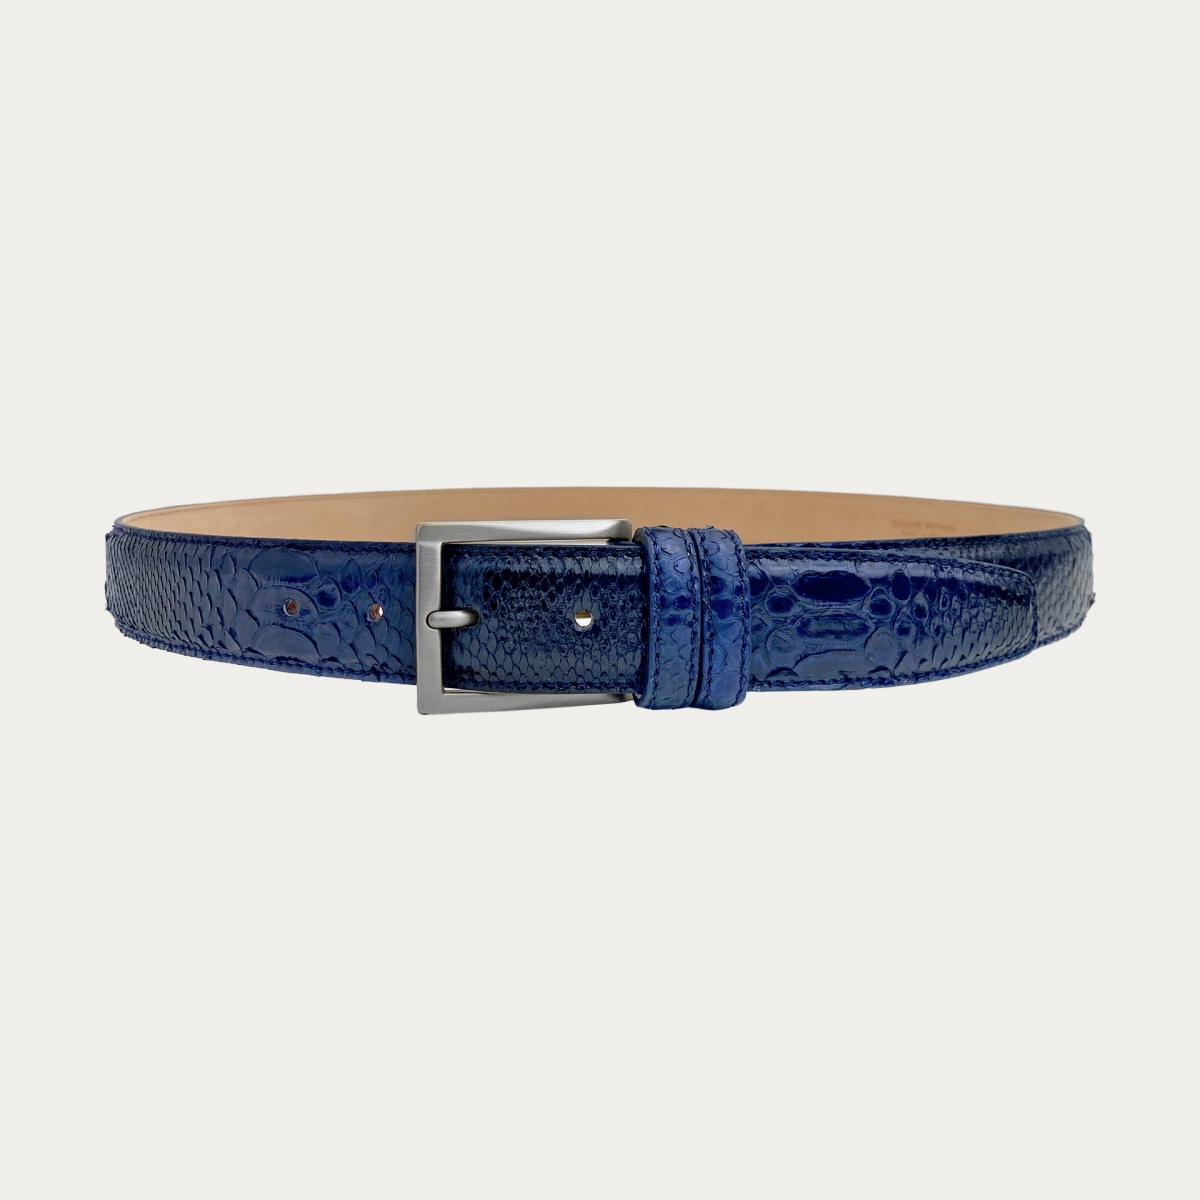 Metallic blue python leather belt